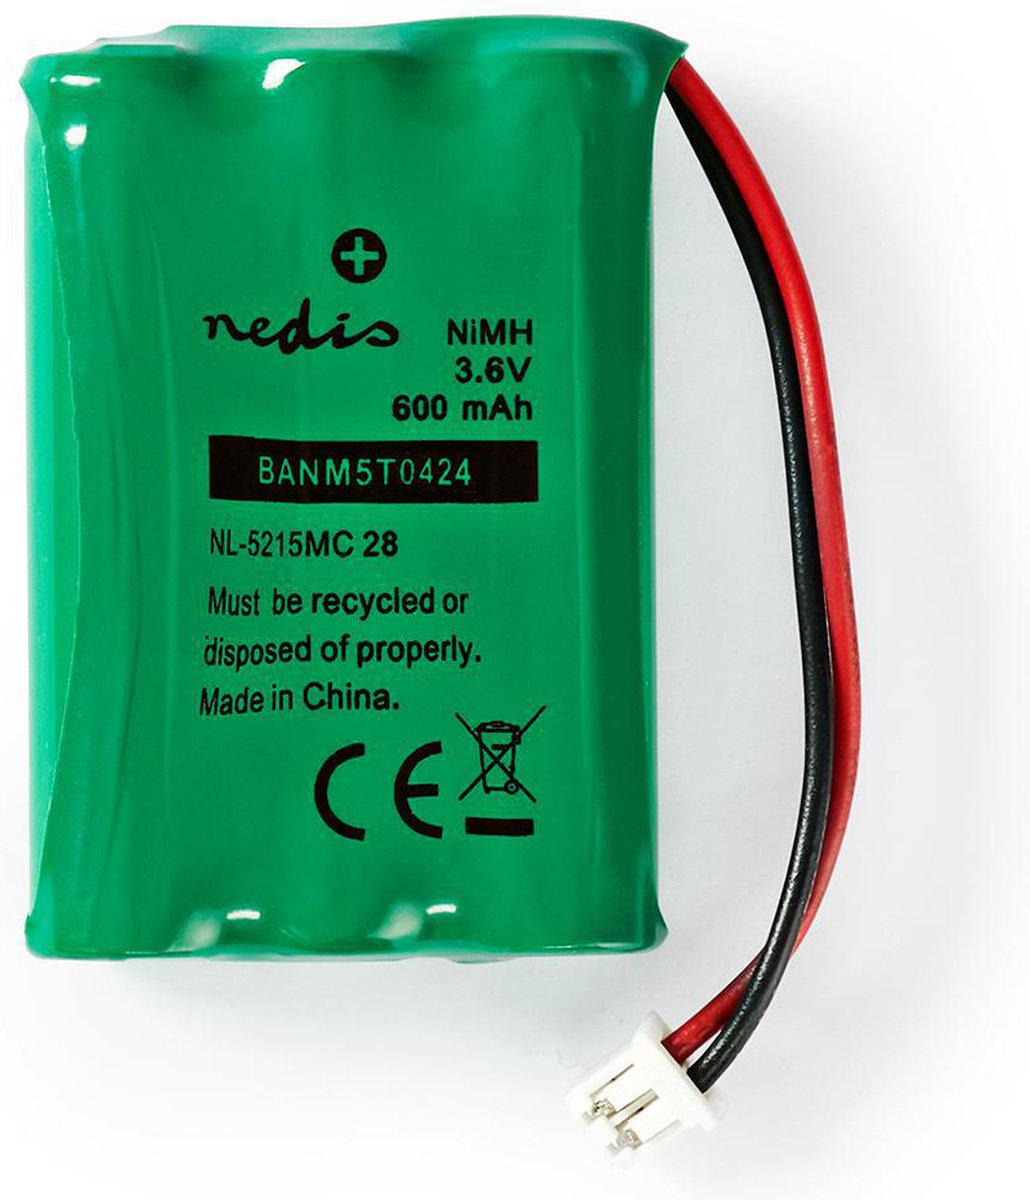 Nedis Oplaadbare Nimh-batterij - Banm5t0424 - Groen